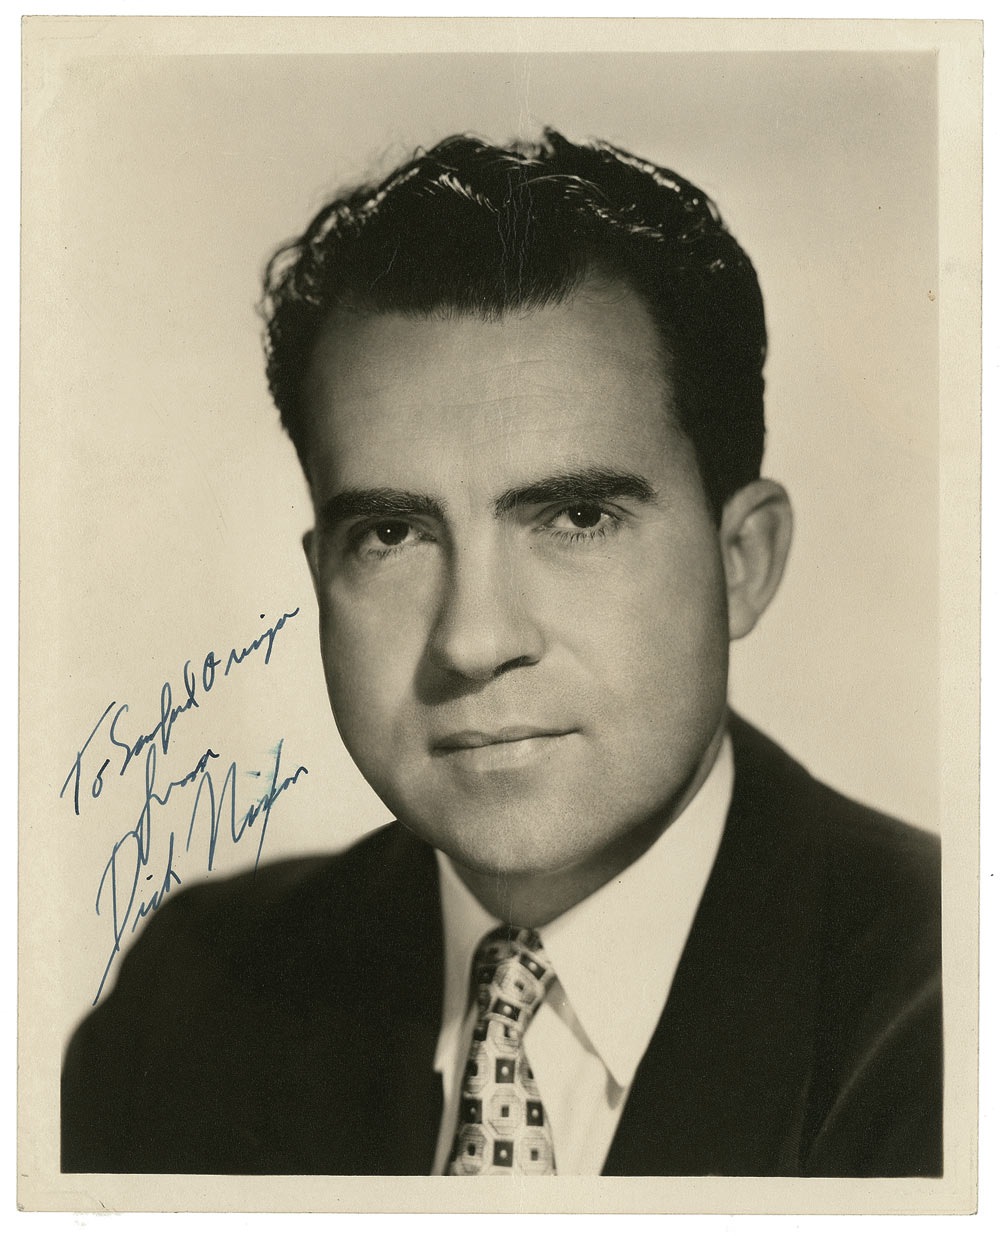 Lot #124 Richard Nixon